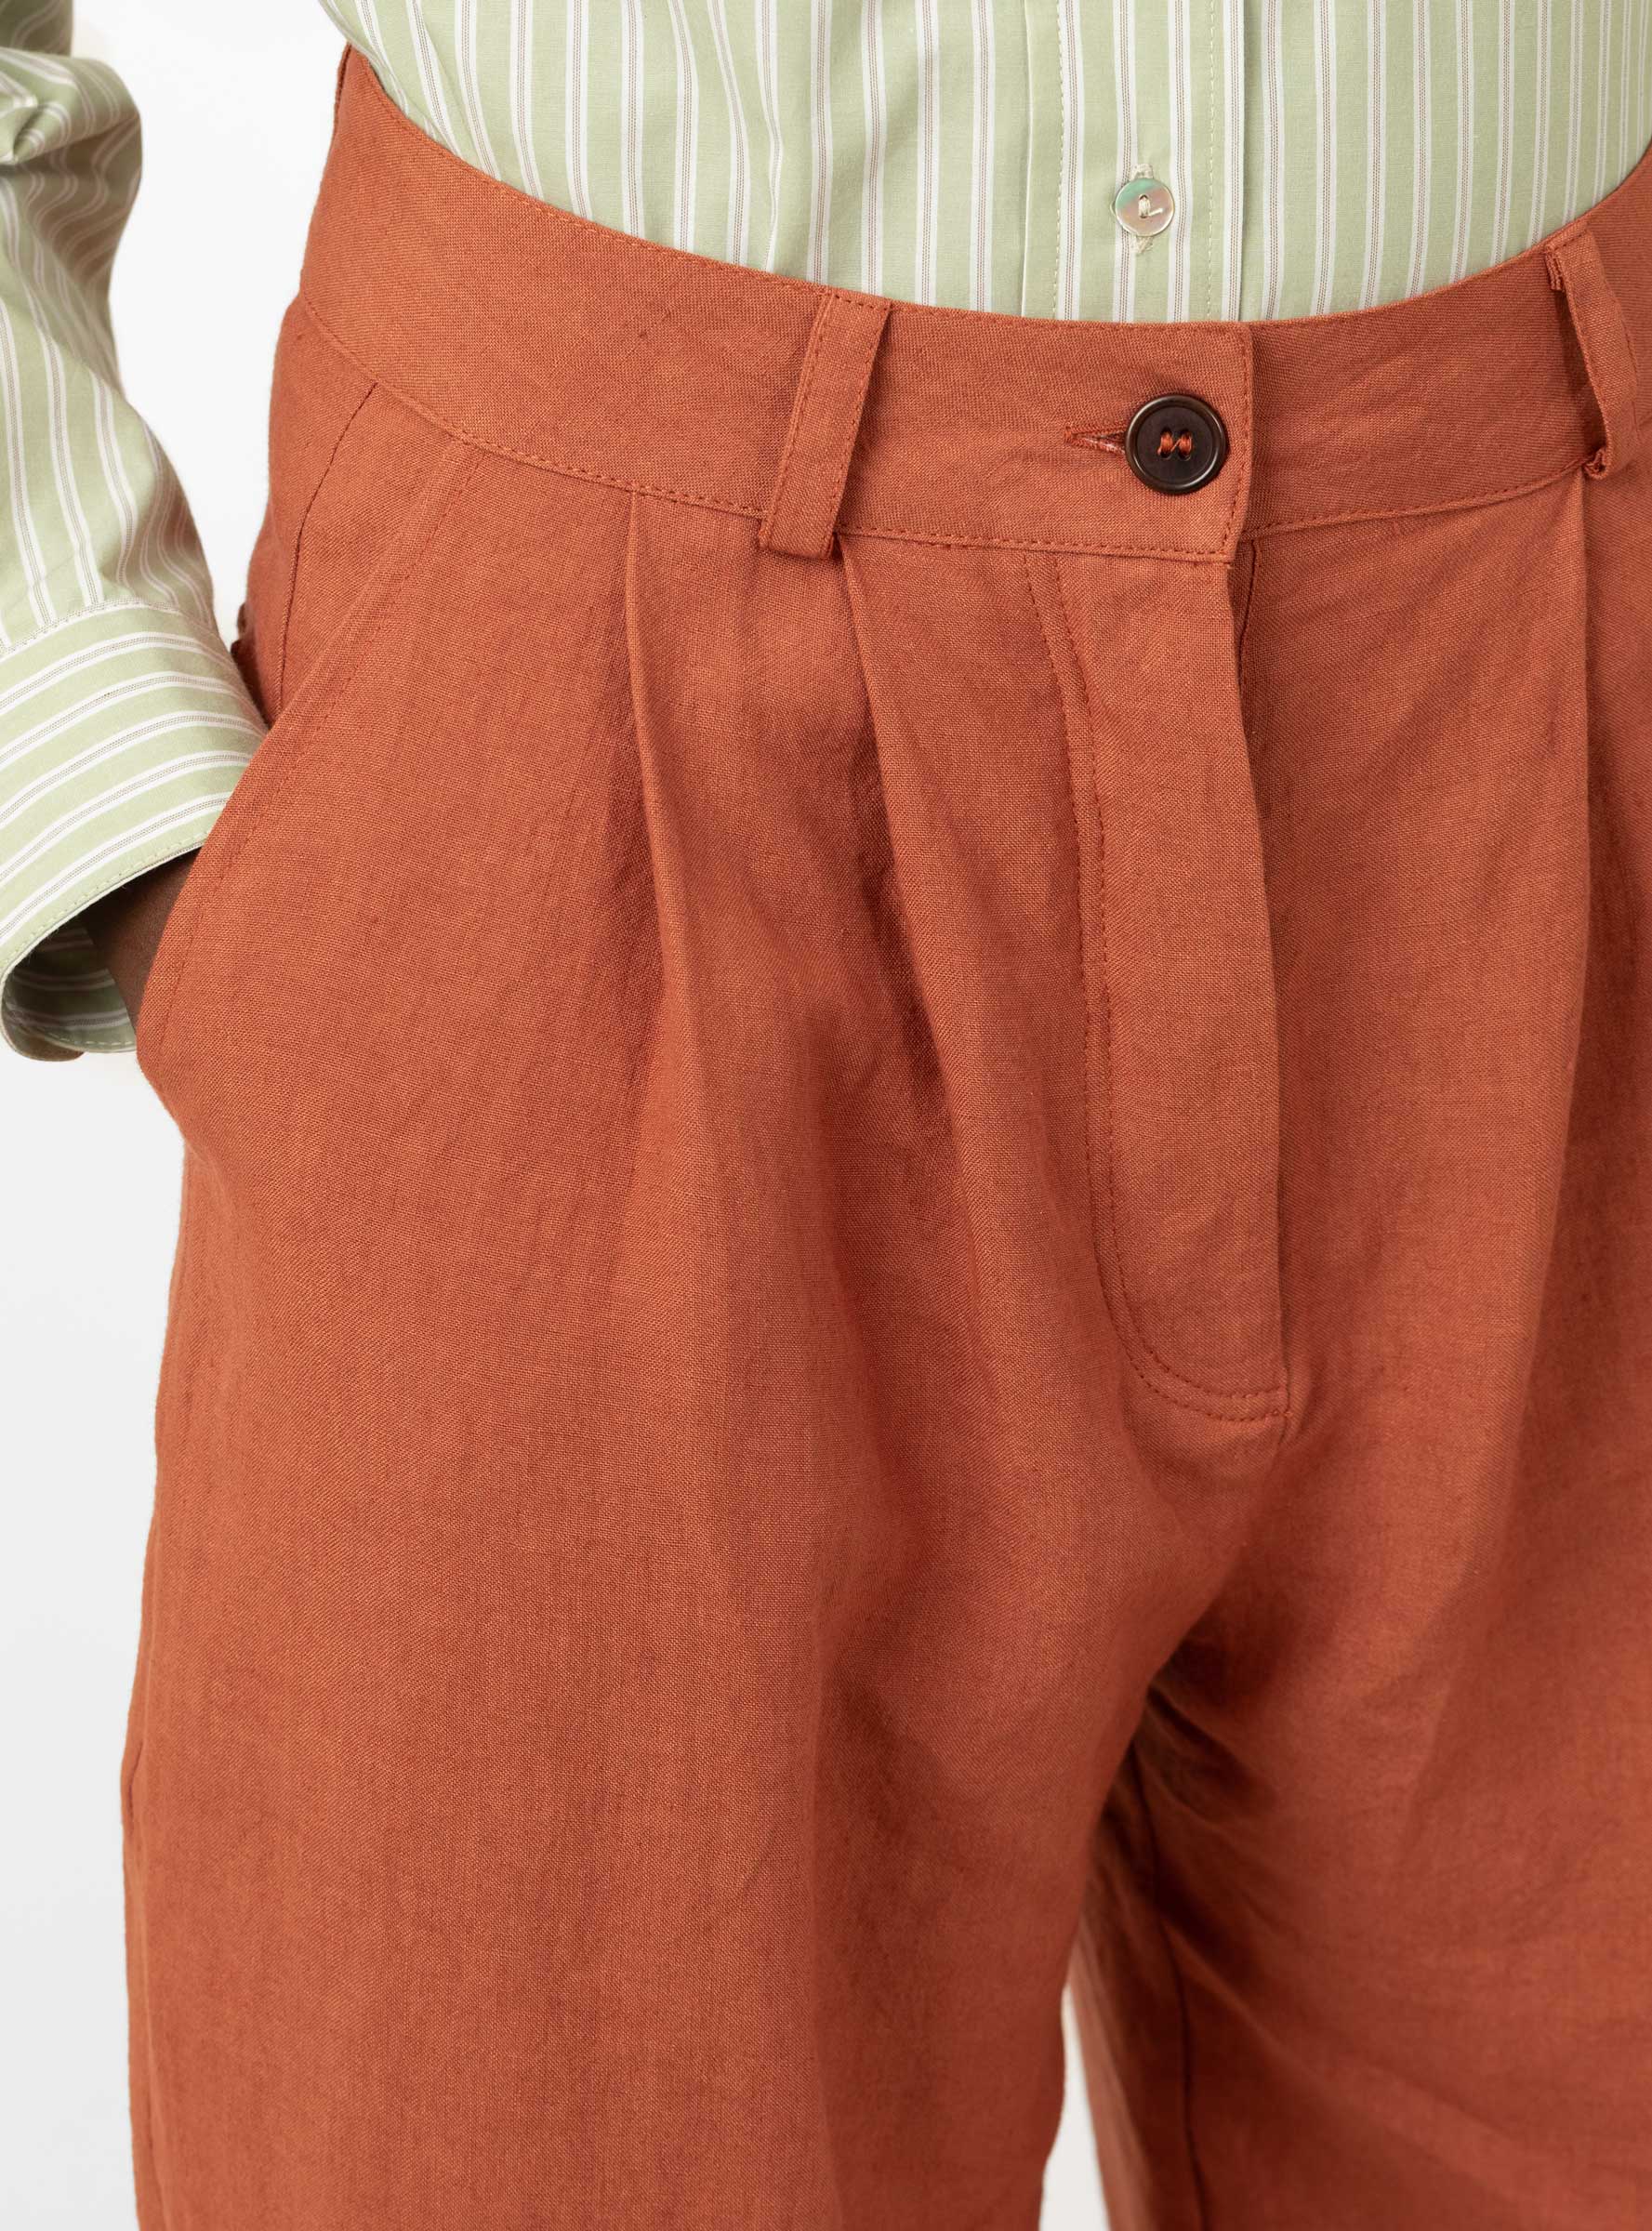  Cawley Eli Linen Shorts Terracotta - Size: Small